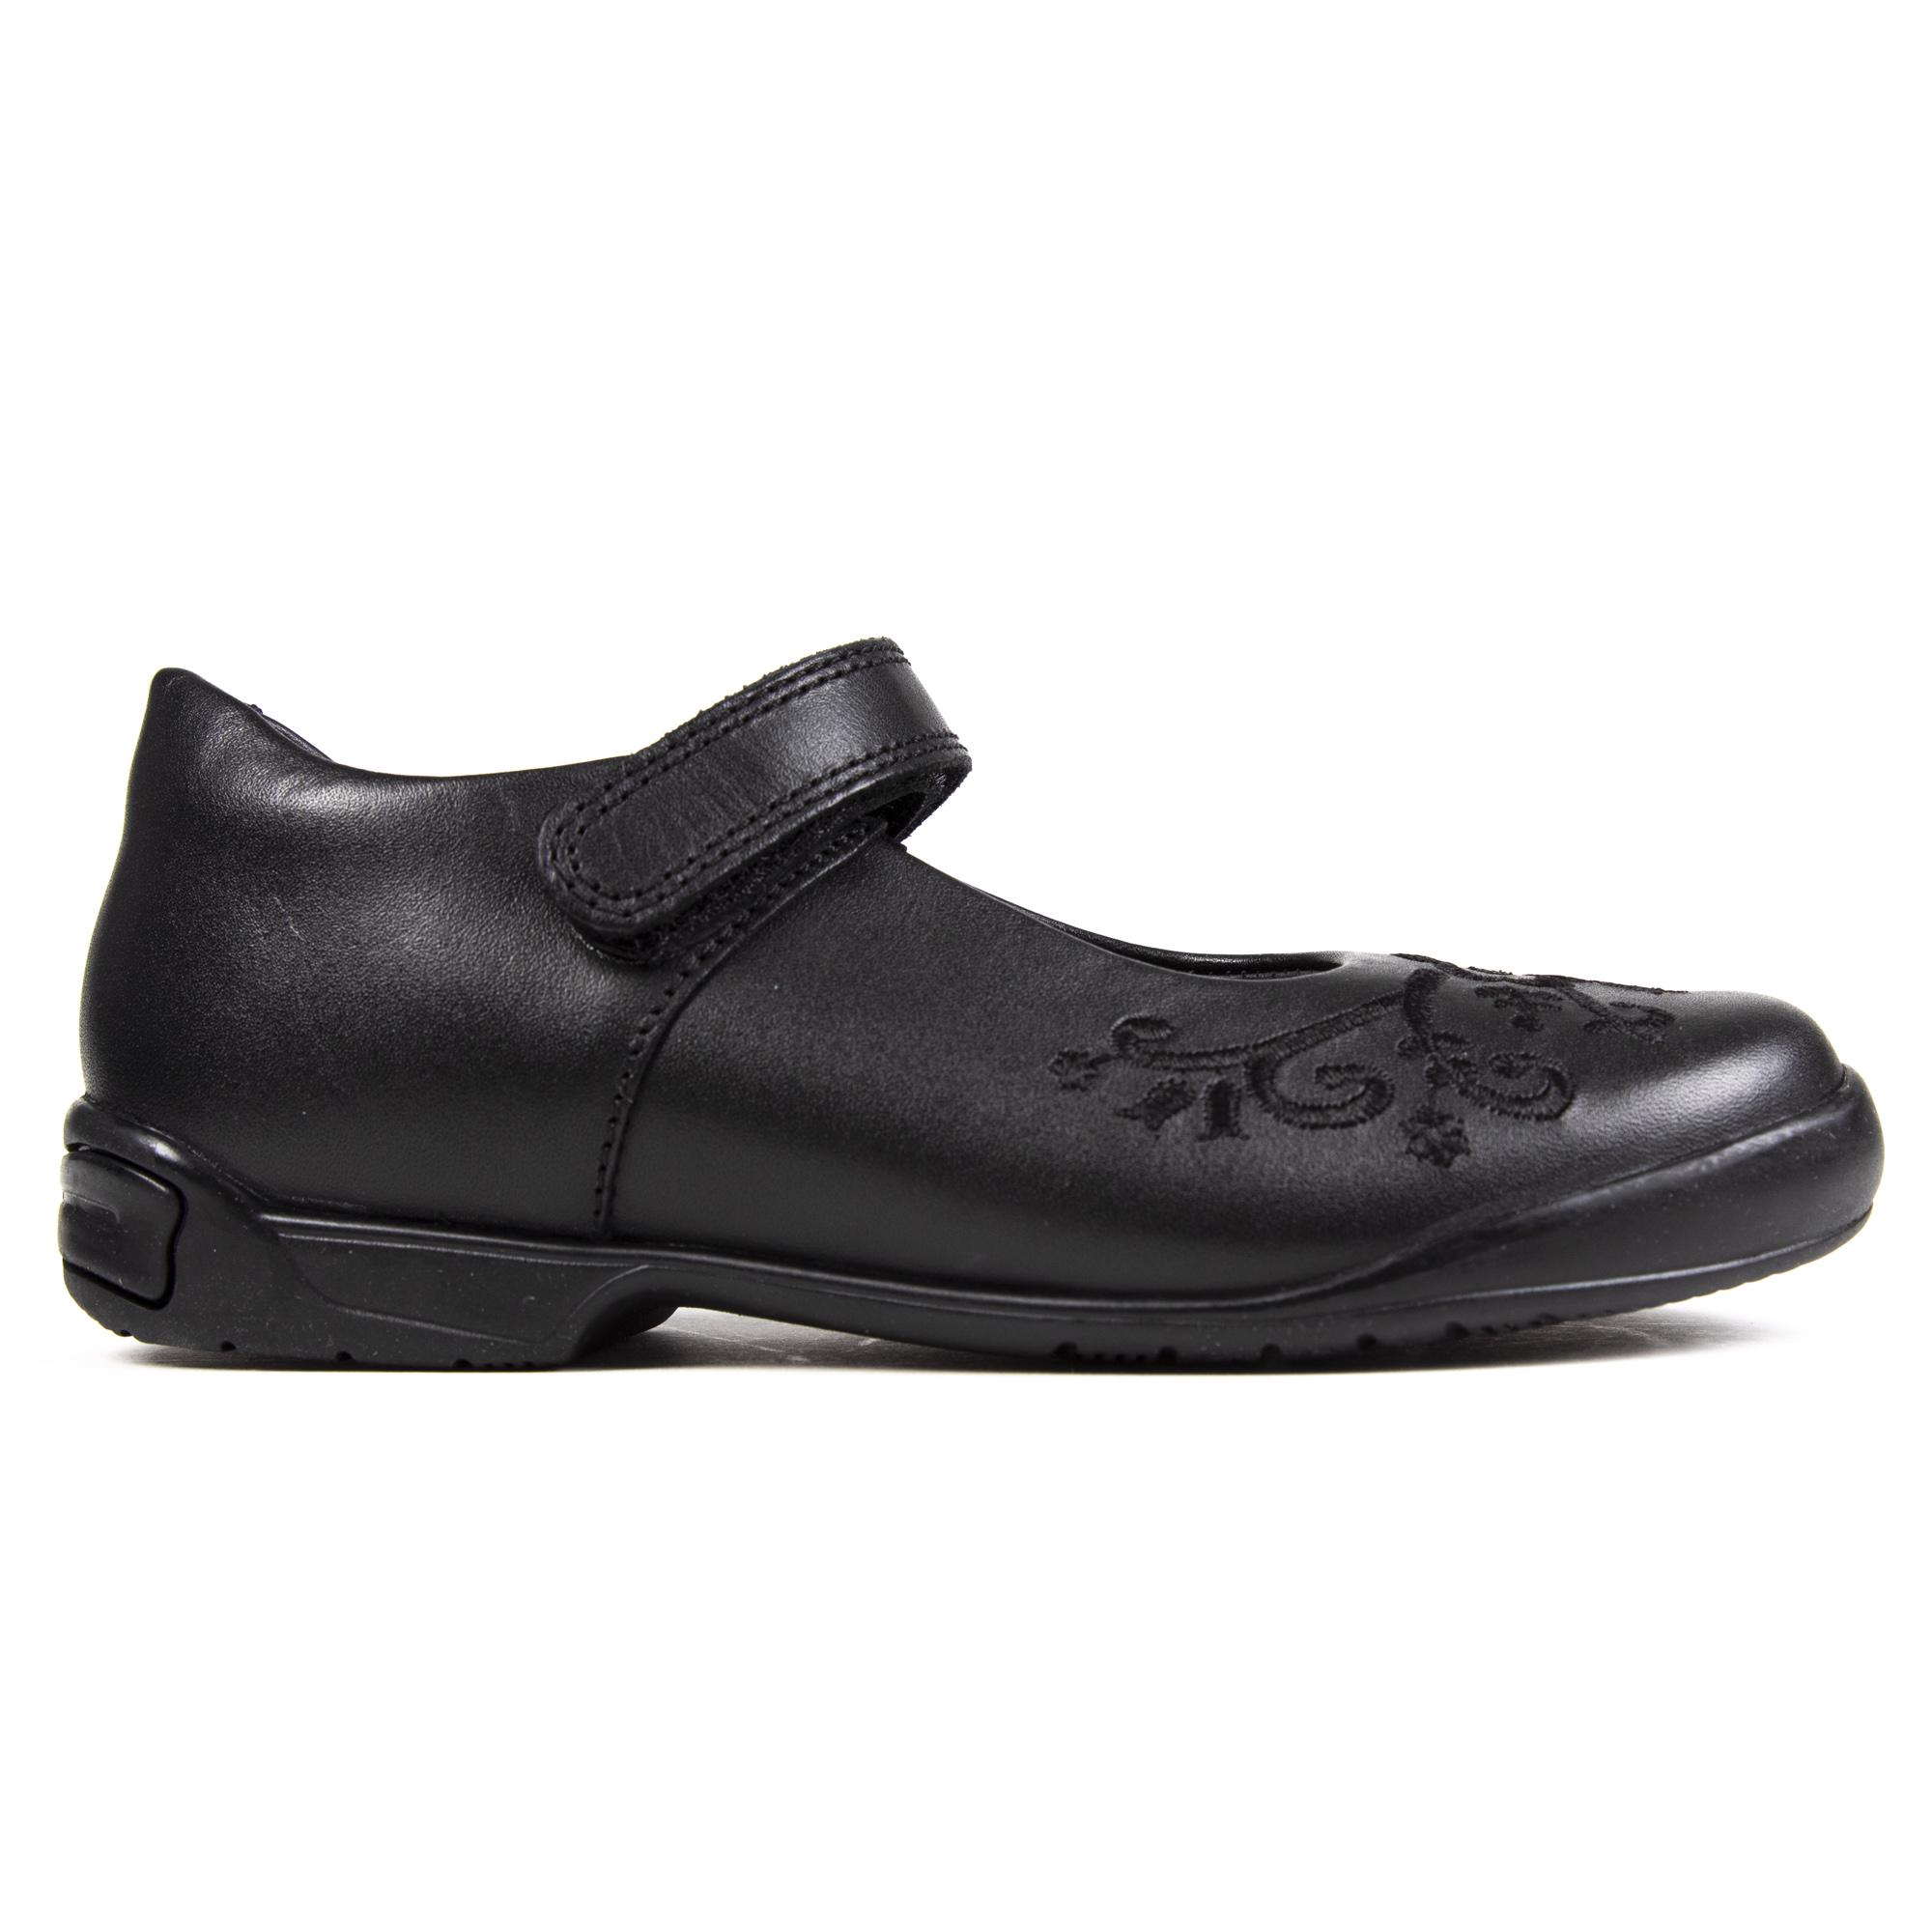 STARTRITE Infants Hopscotch School Shoes Black